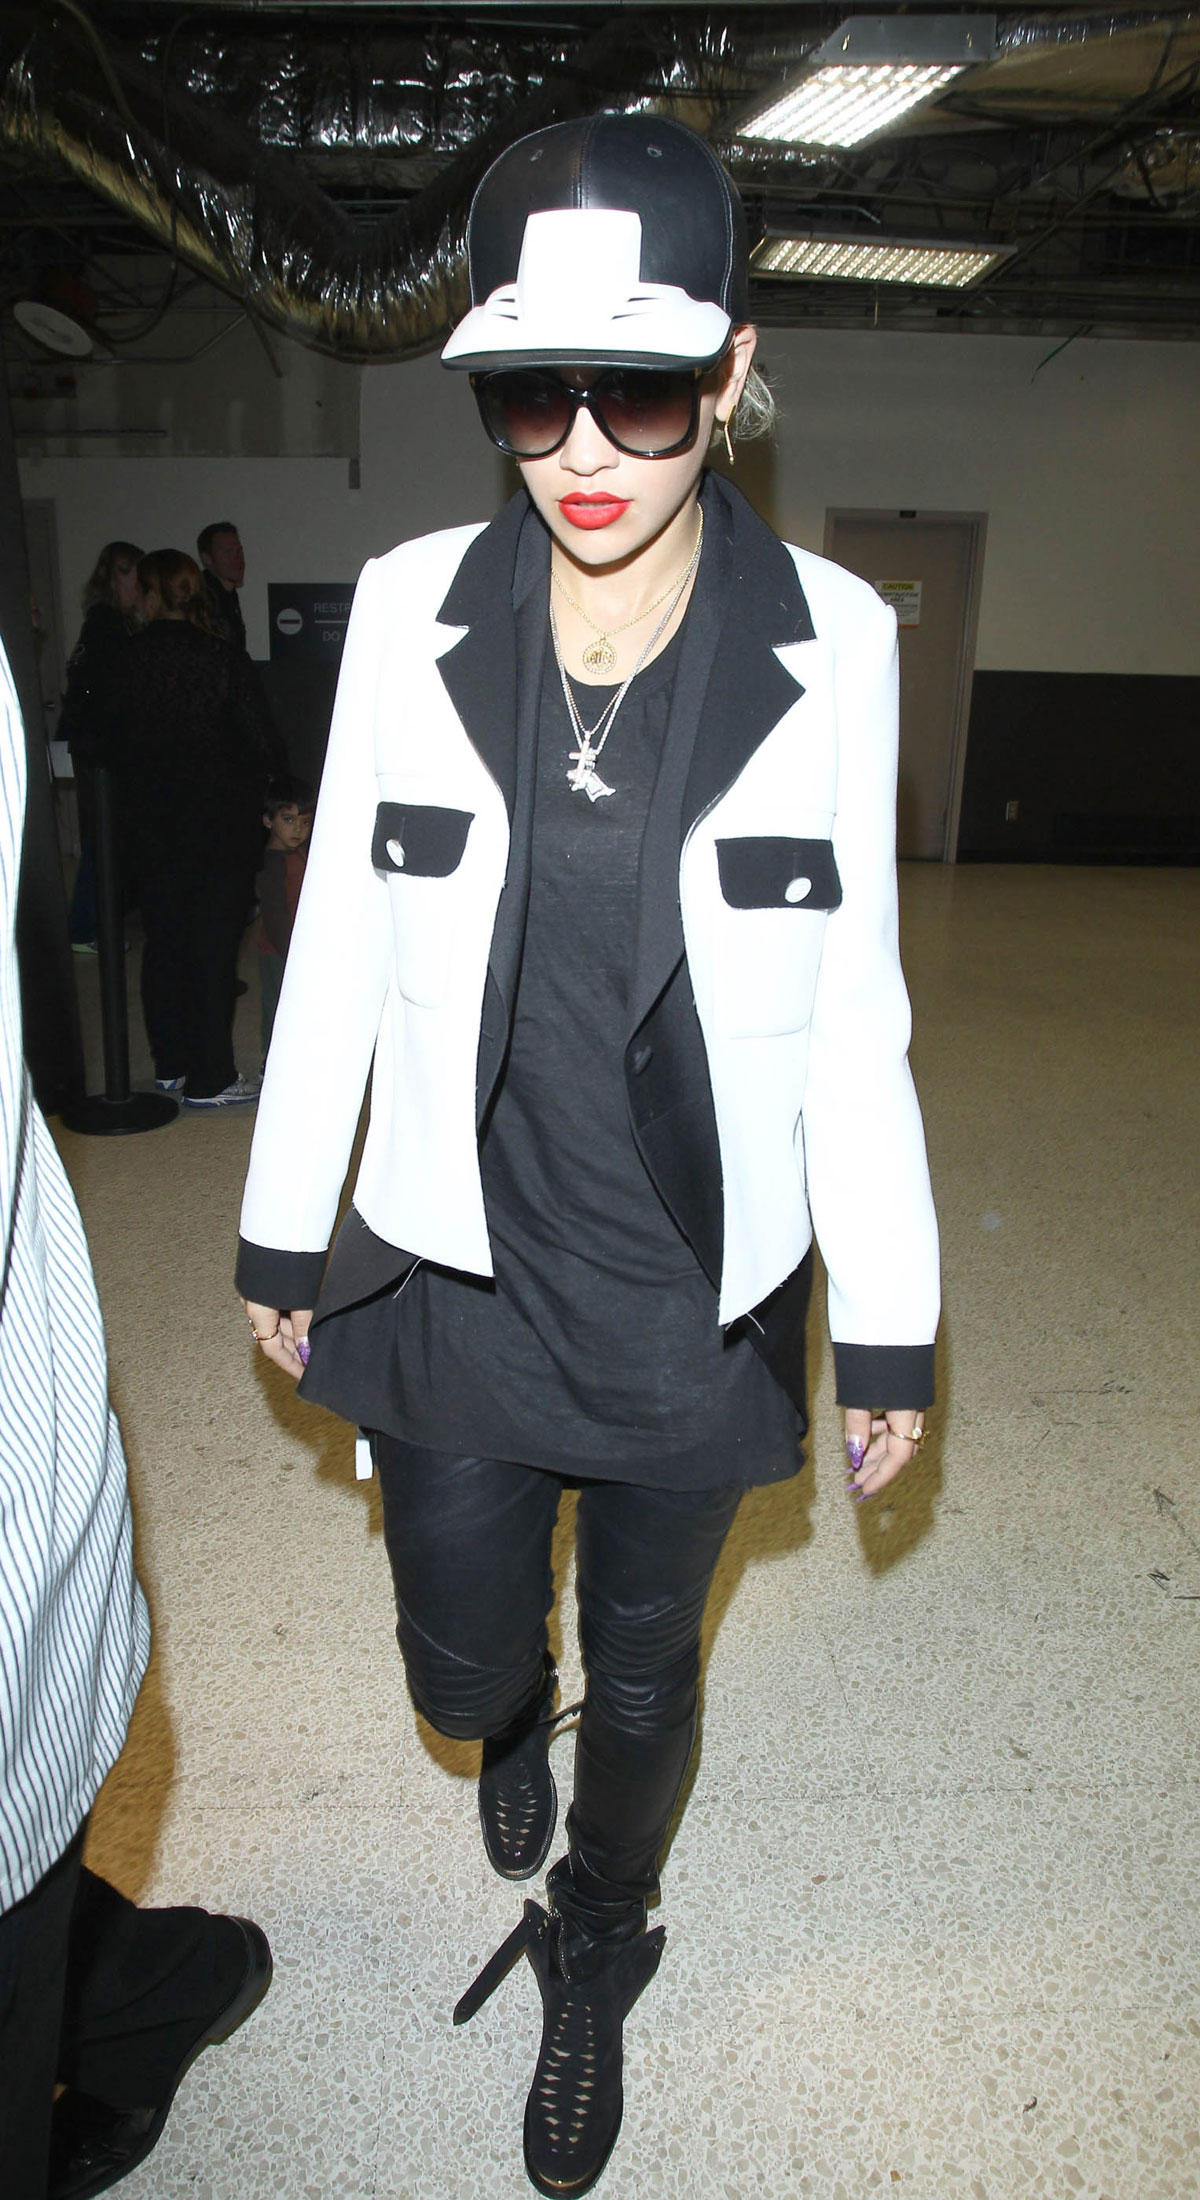 Rita Ora arriving at LAX airport